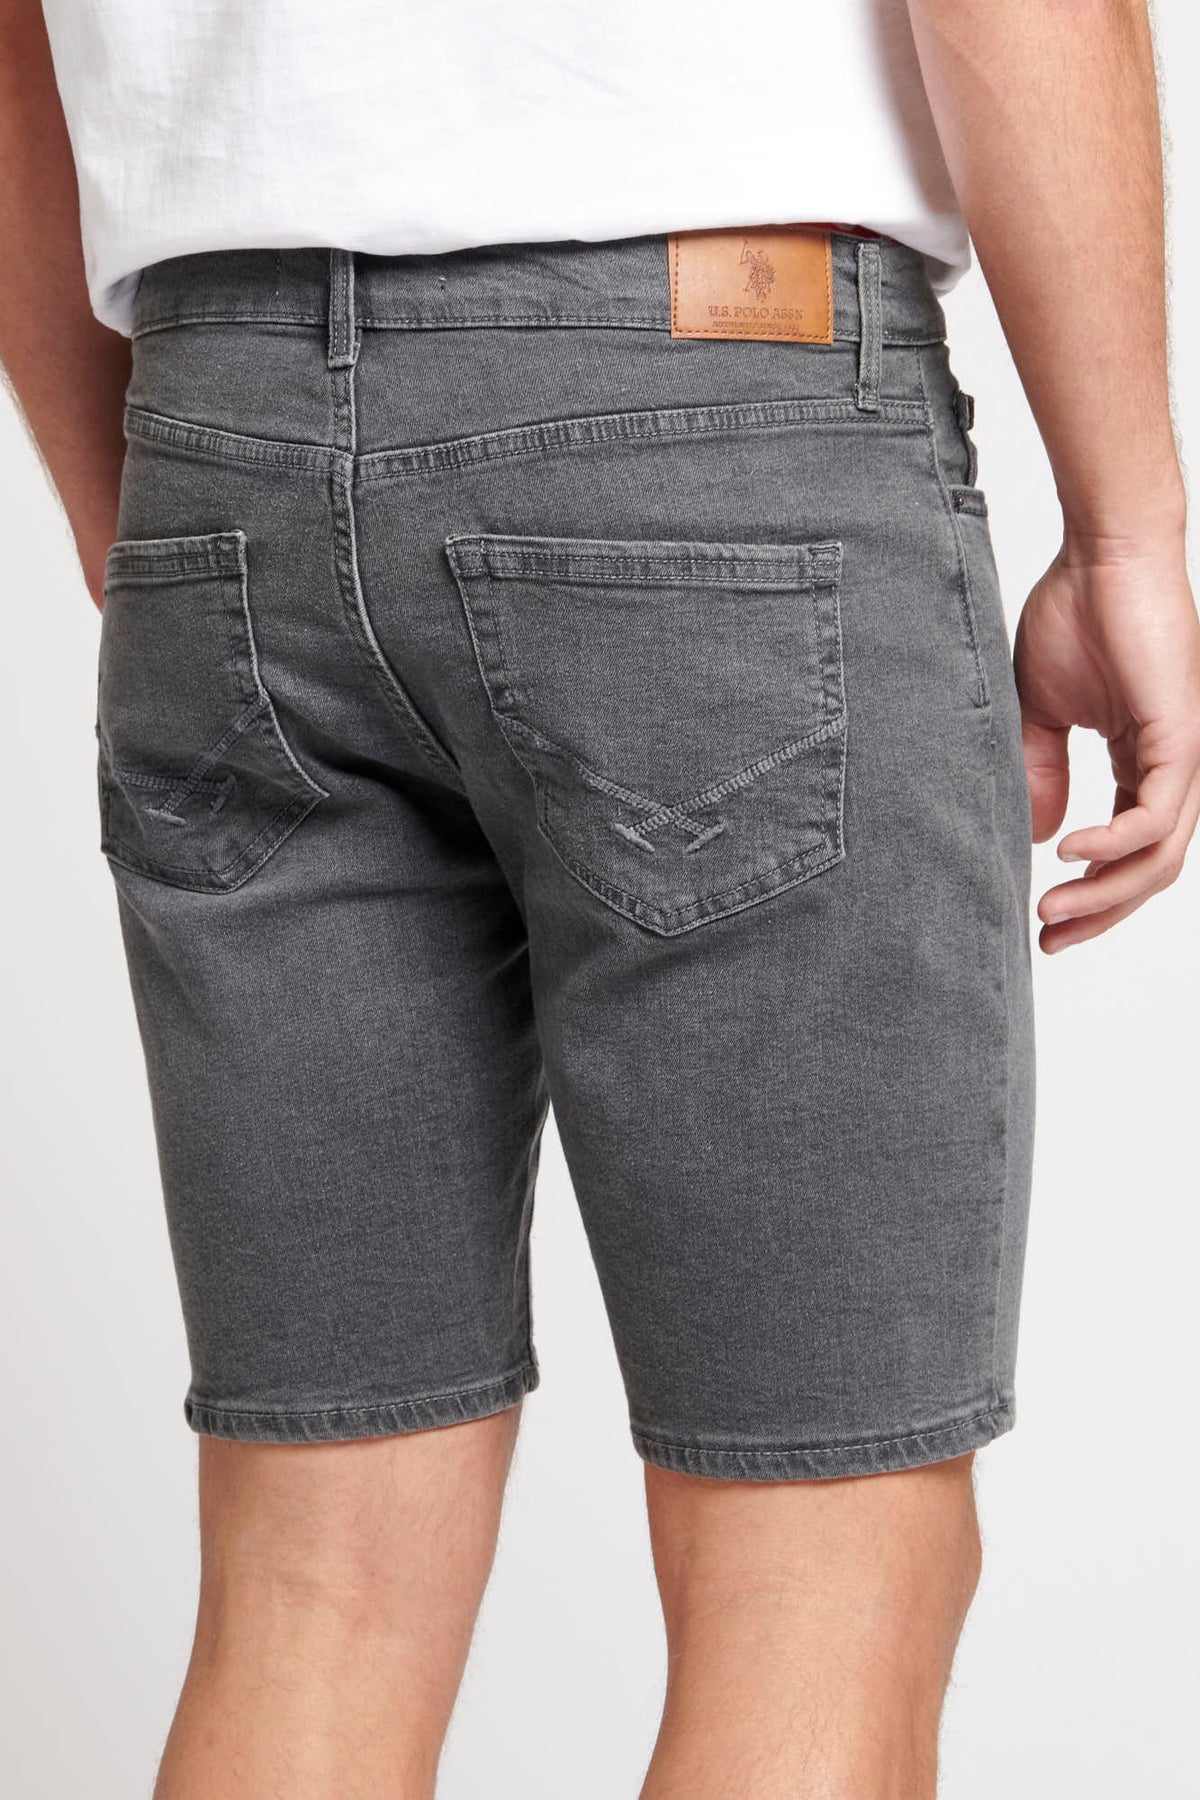 Mens 5 pocket Denim Shorts in Grey Wash